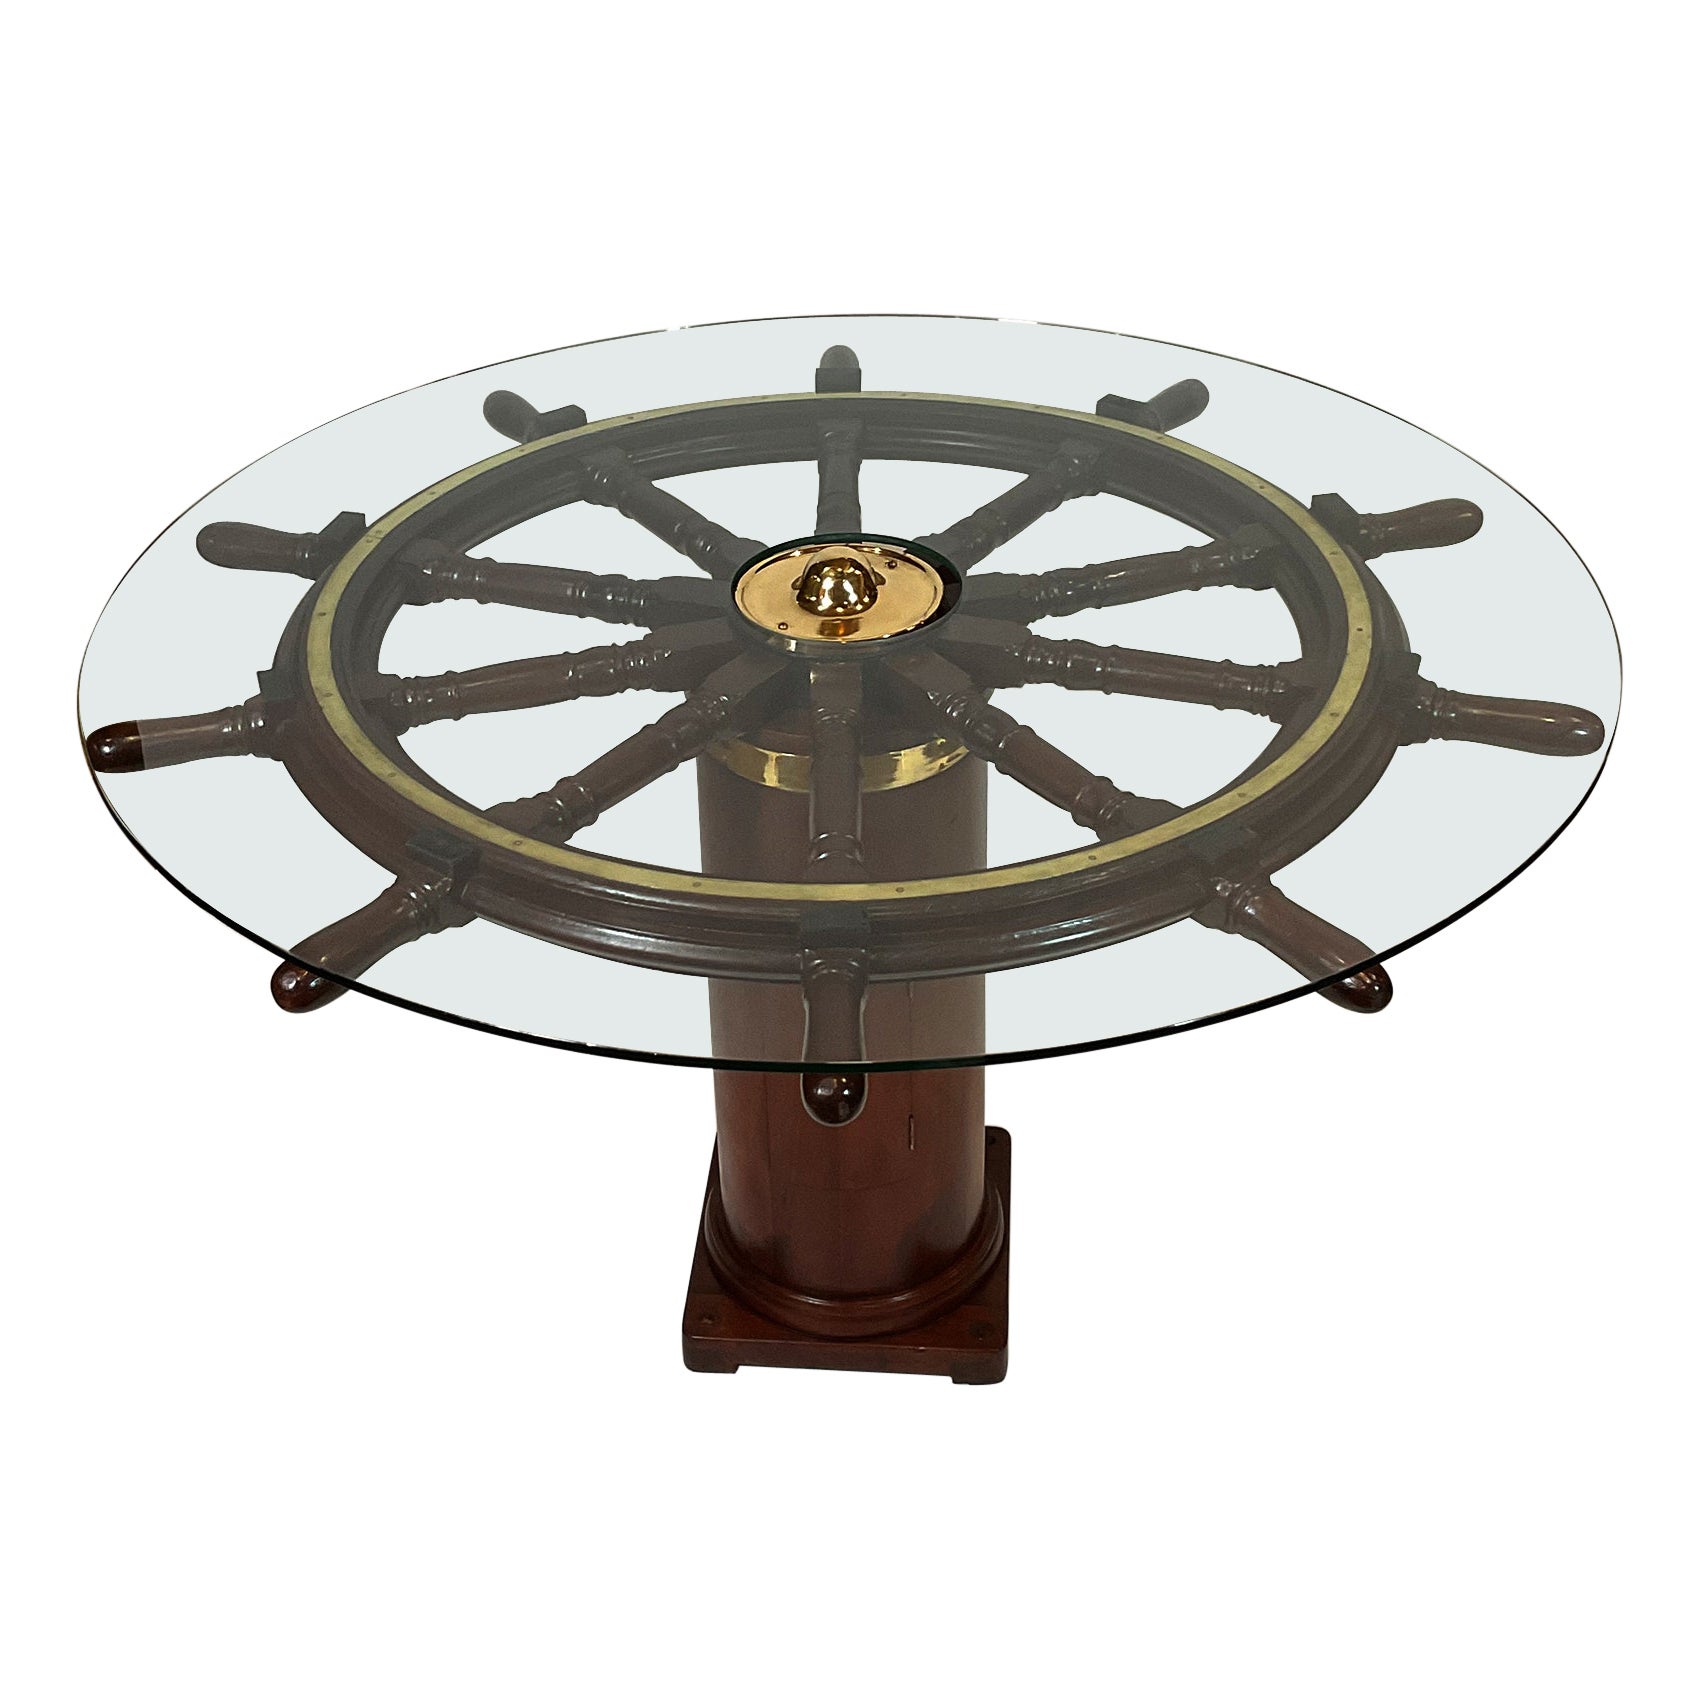 Ten Spoke Antique Ships Wheel Dining Table